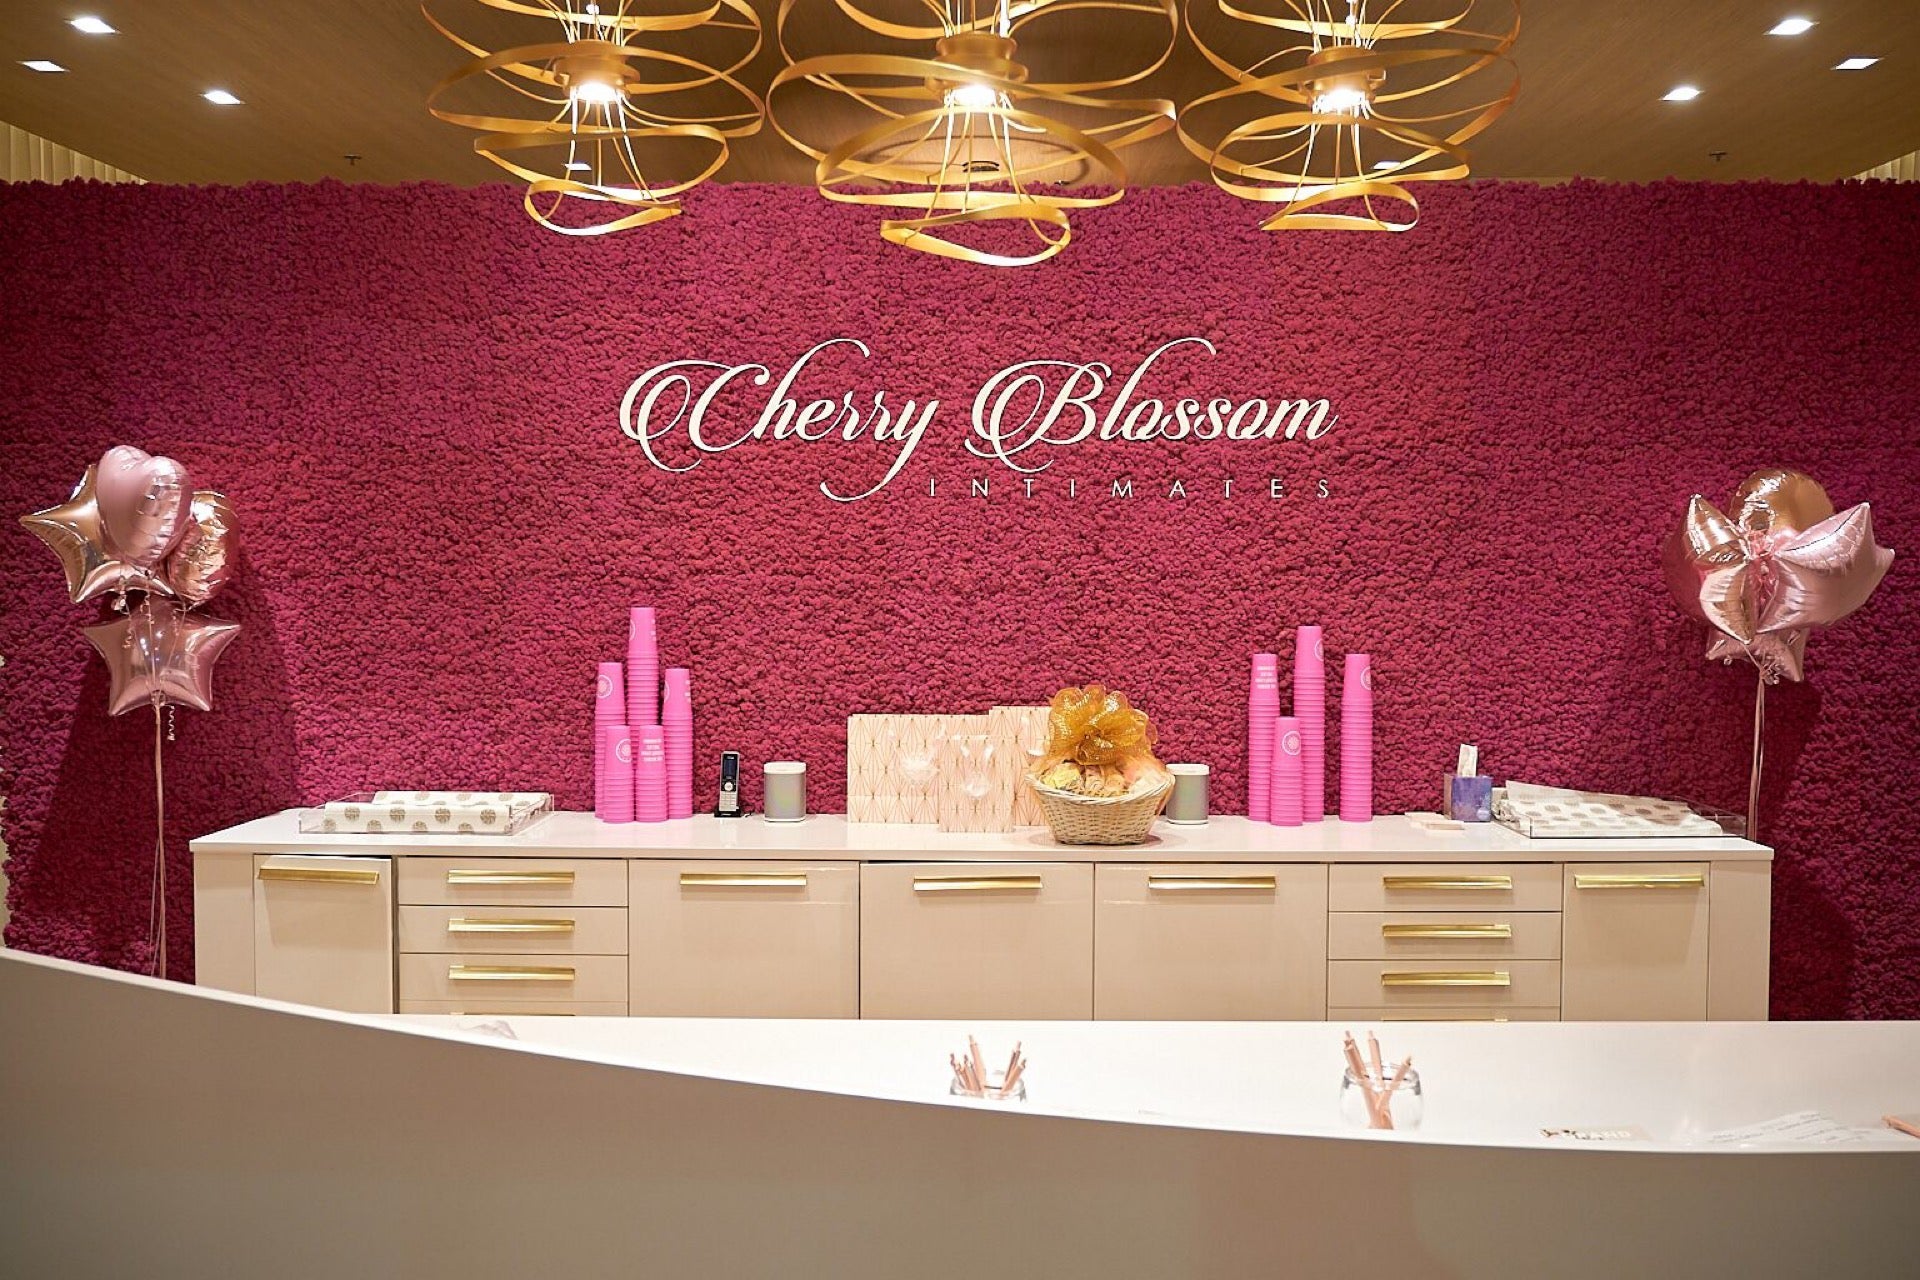 Cherry Blossom Intimates, Glenarden MD